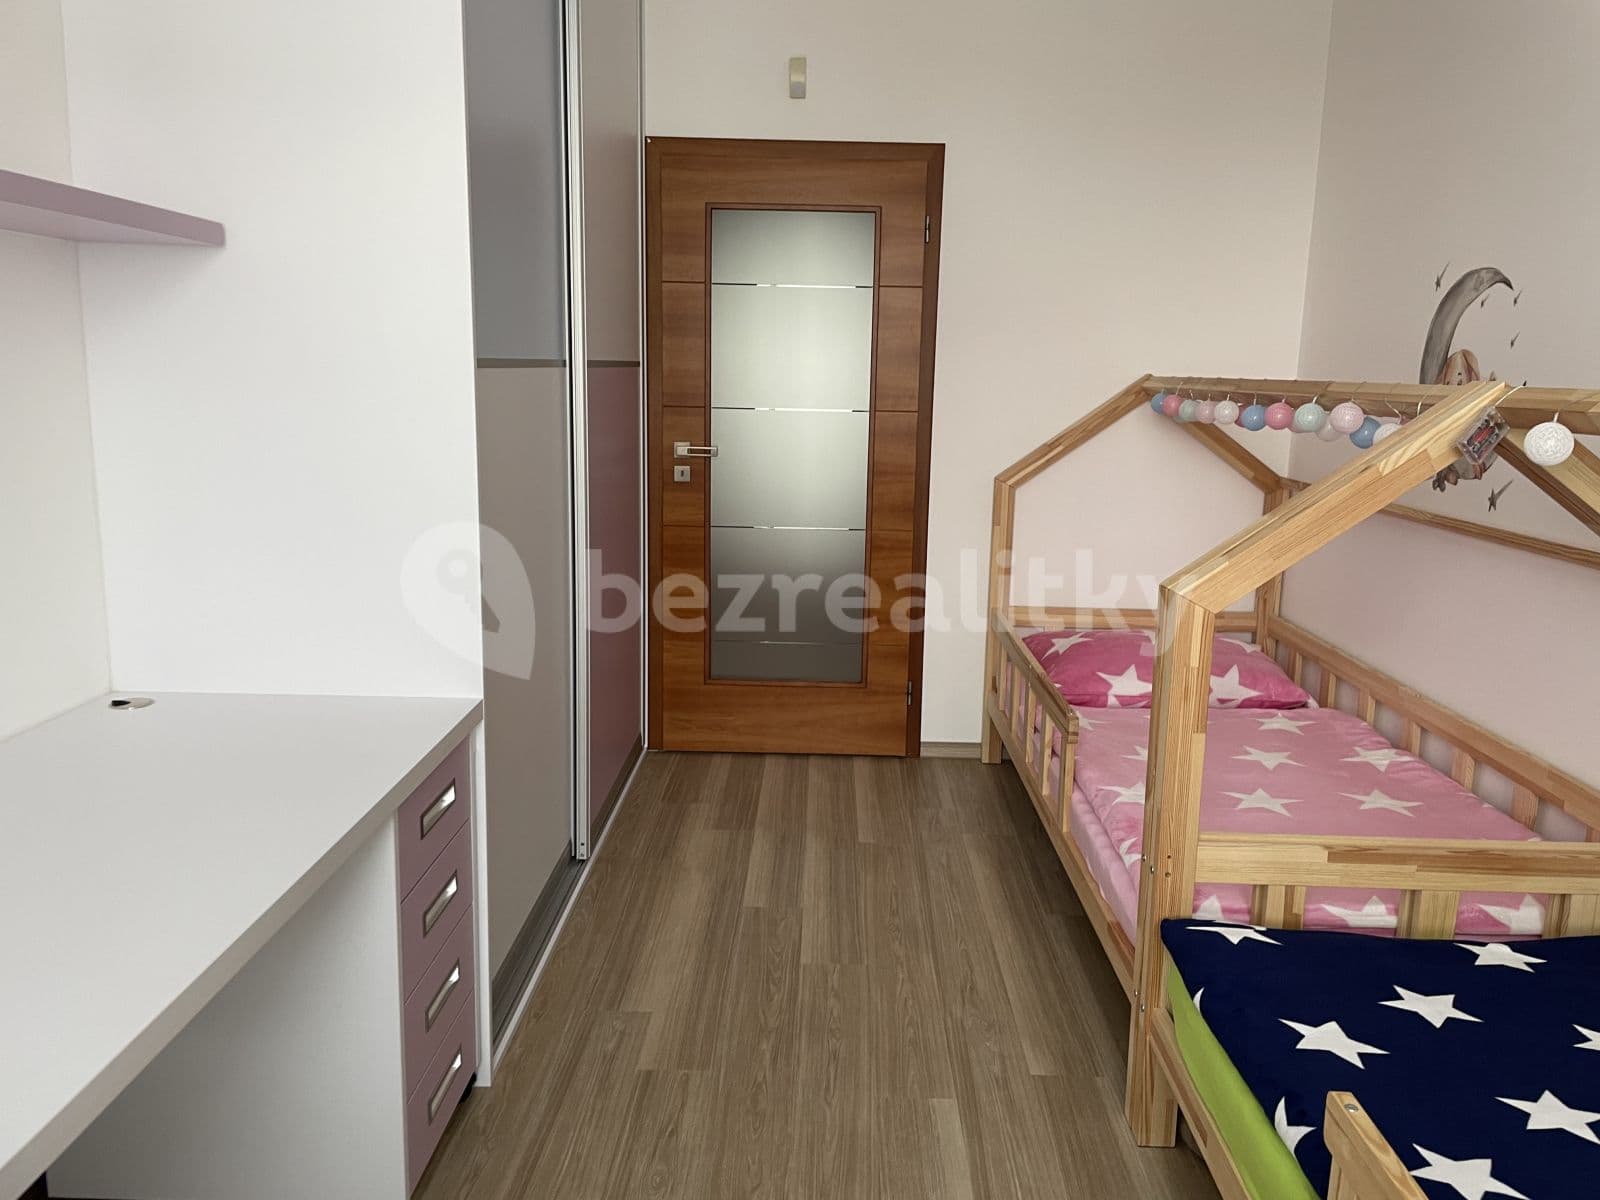 2 bedroom with open-plan kitchen flat to rent, 65 m², Žampiónová, Prague, Prague